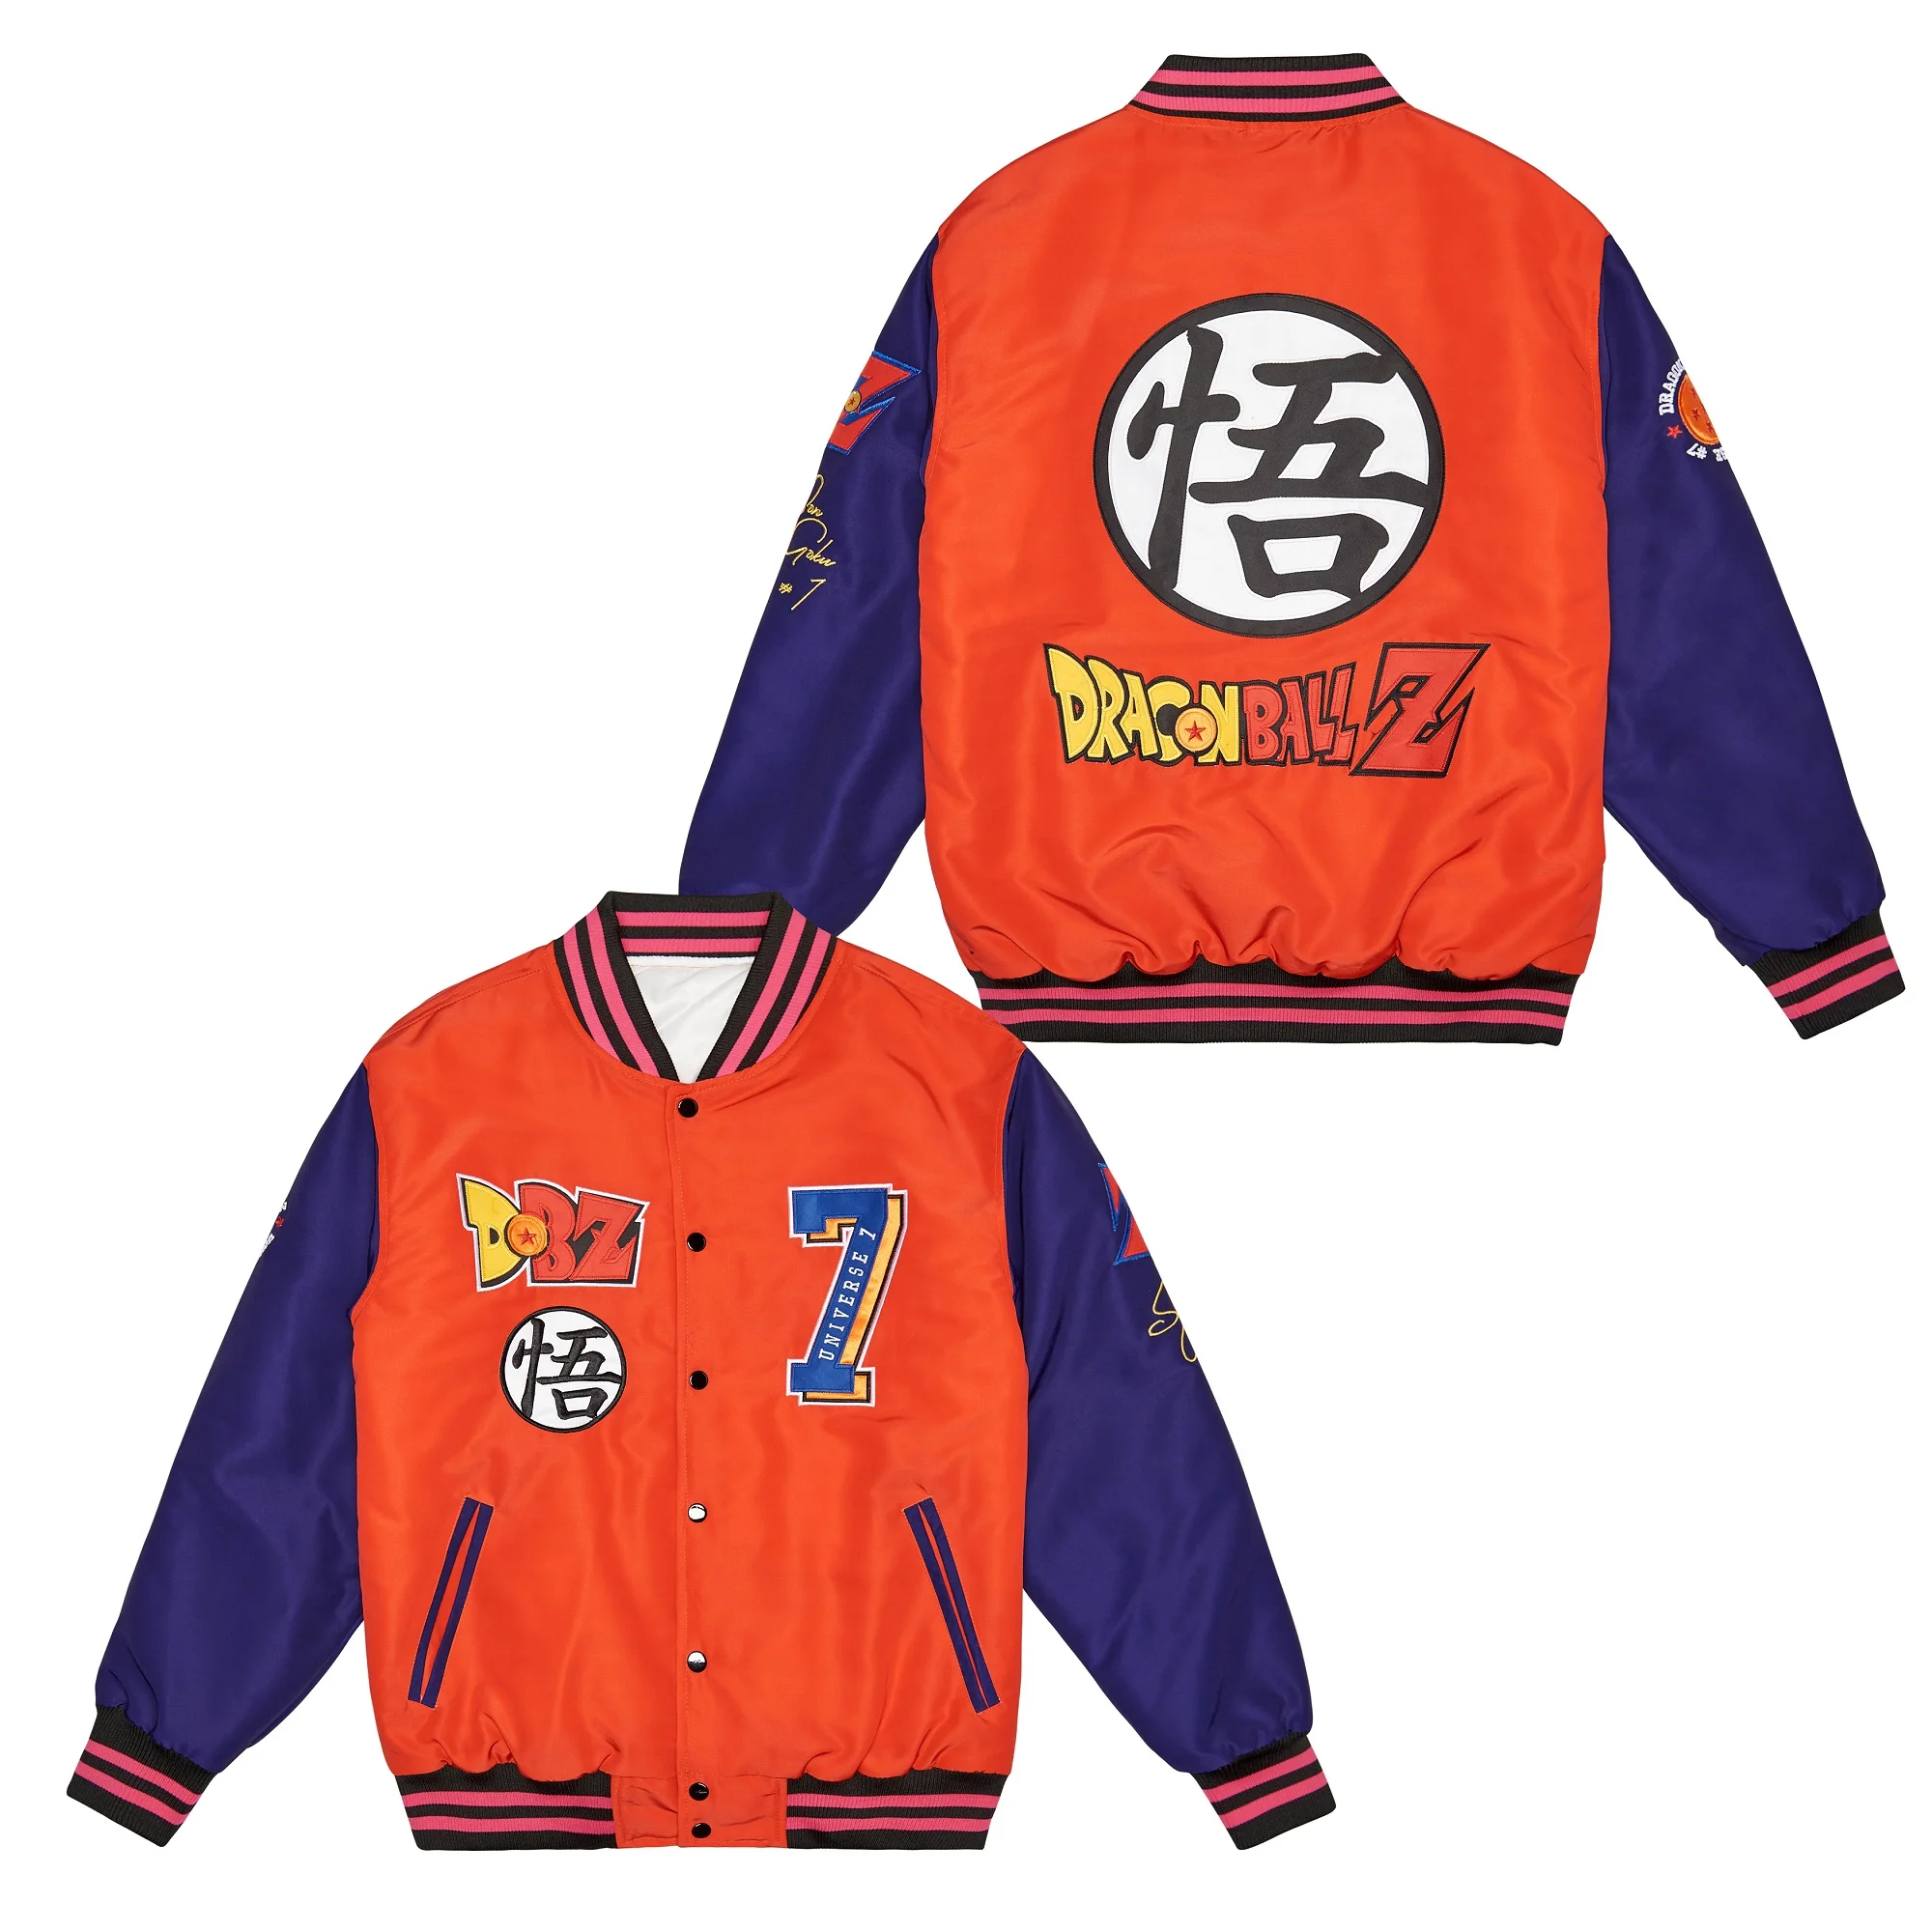 

BG Man JACKET & COAT DBZ 07 Embroidery sewing Outdoor freight winter jacket woolen cotton warm windproof orange SATIN